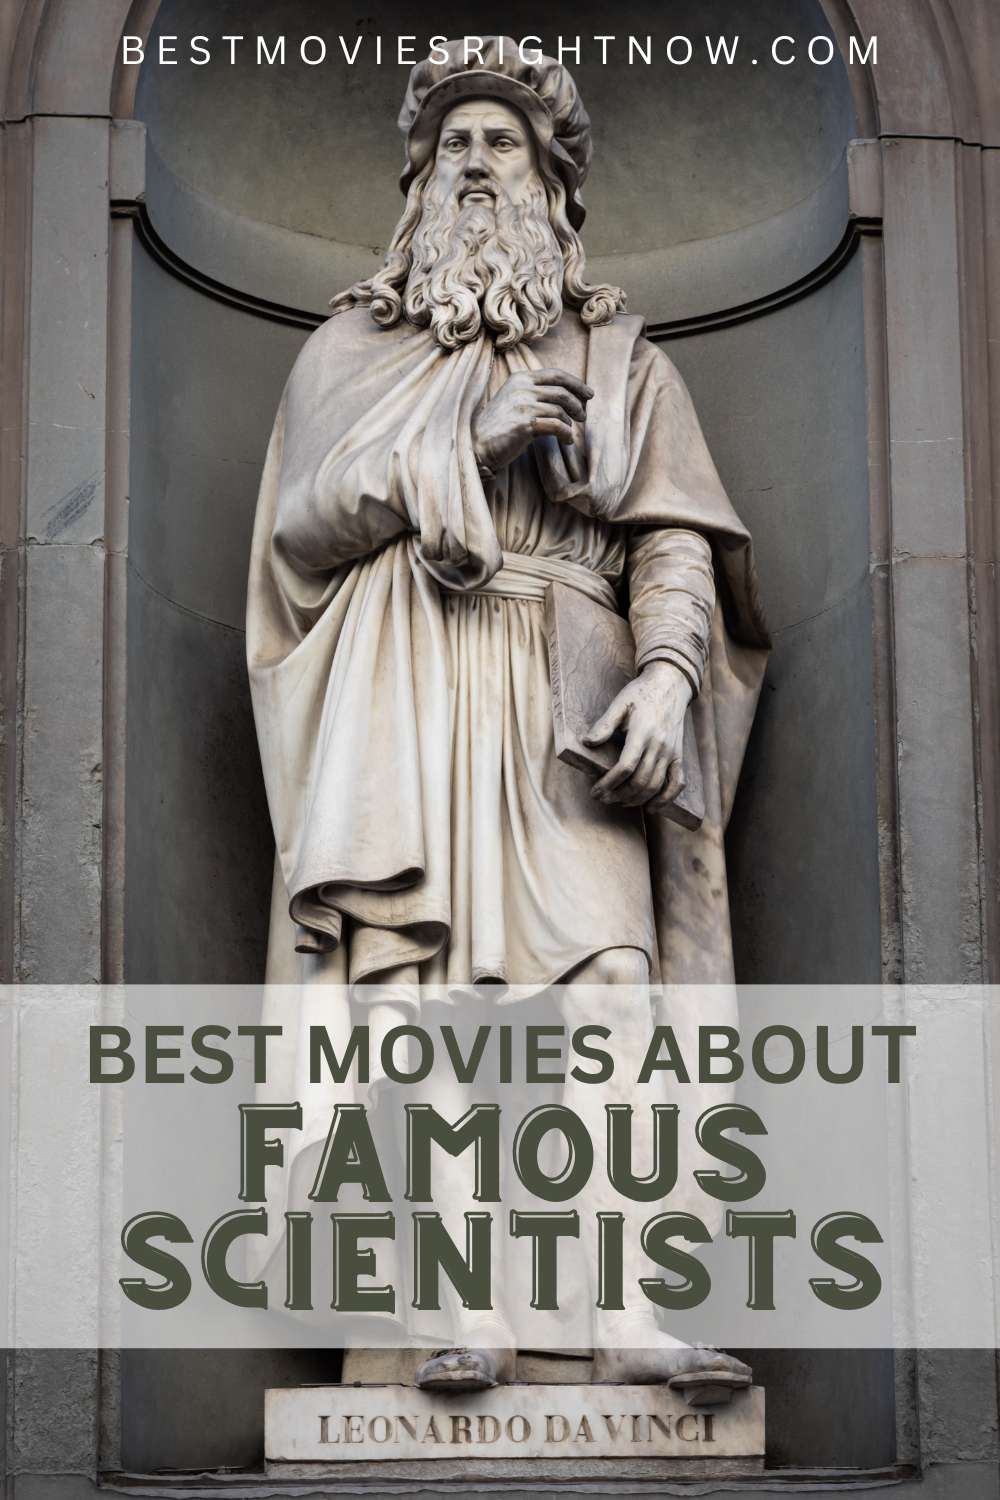 a statue of leonardo da vinci with caption "best movies about famous scientists"